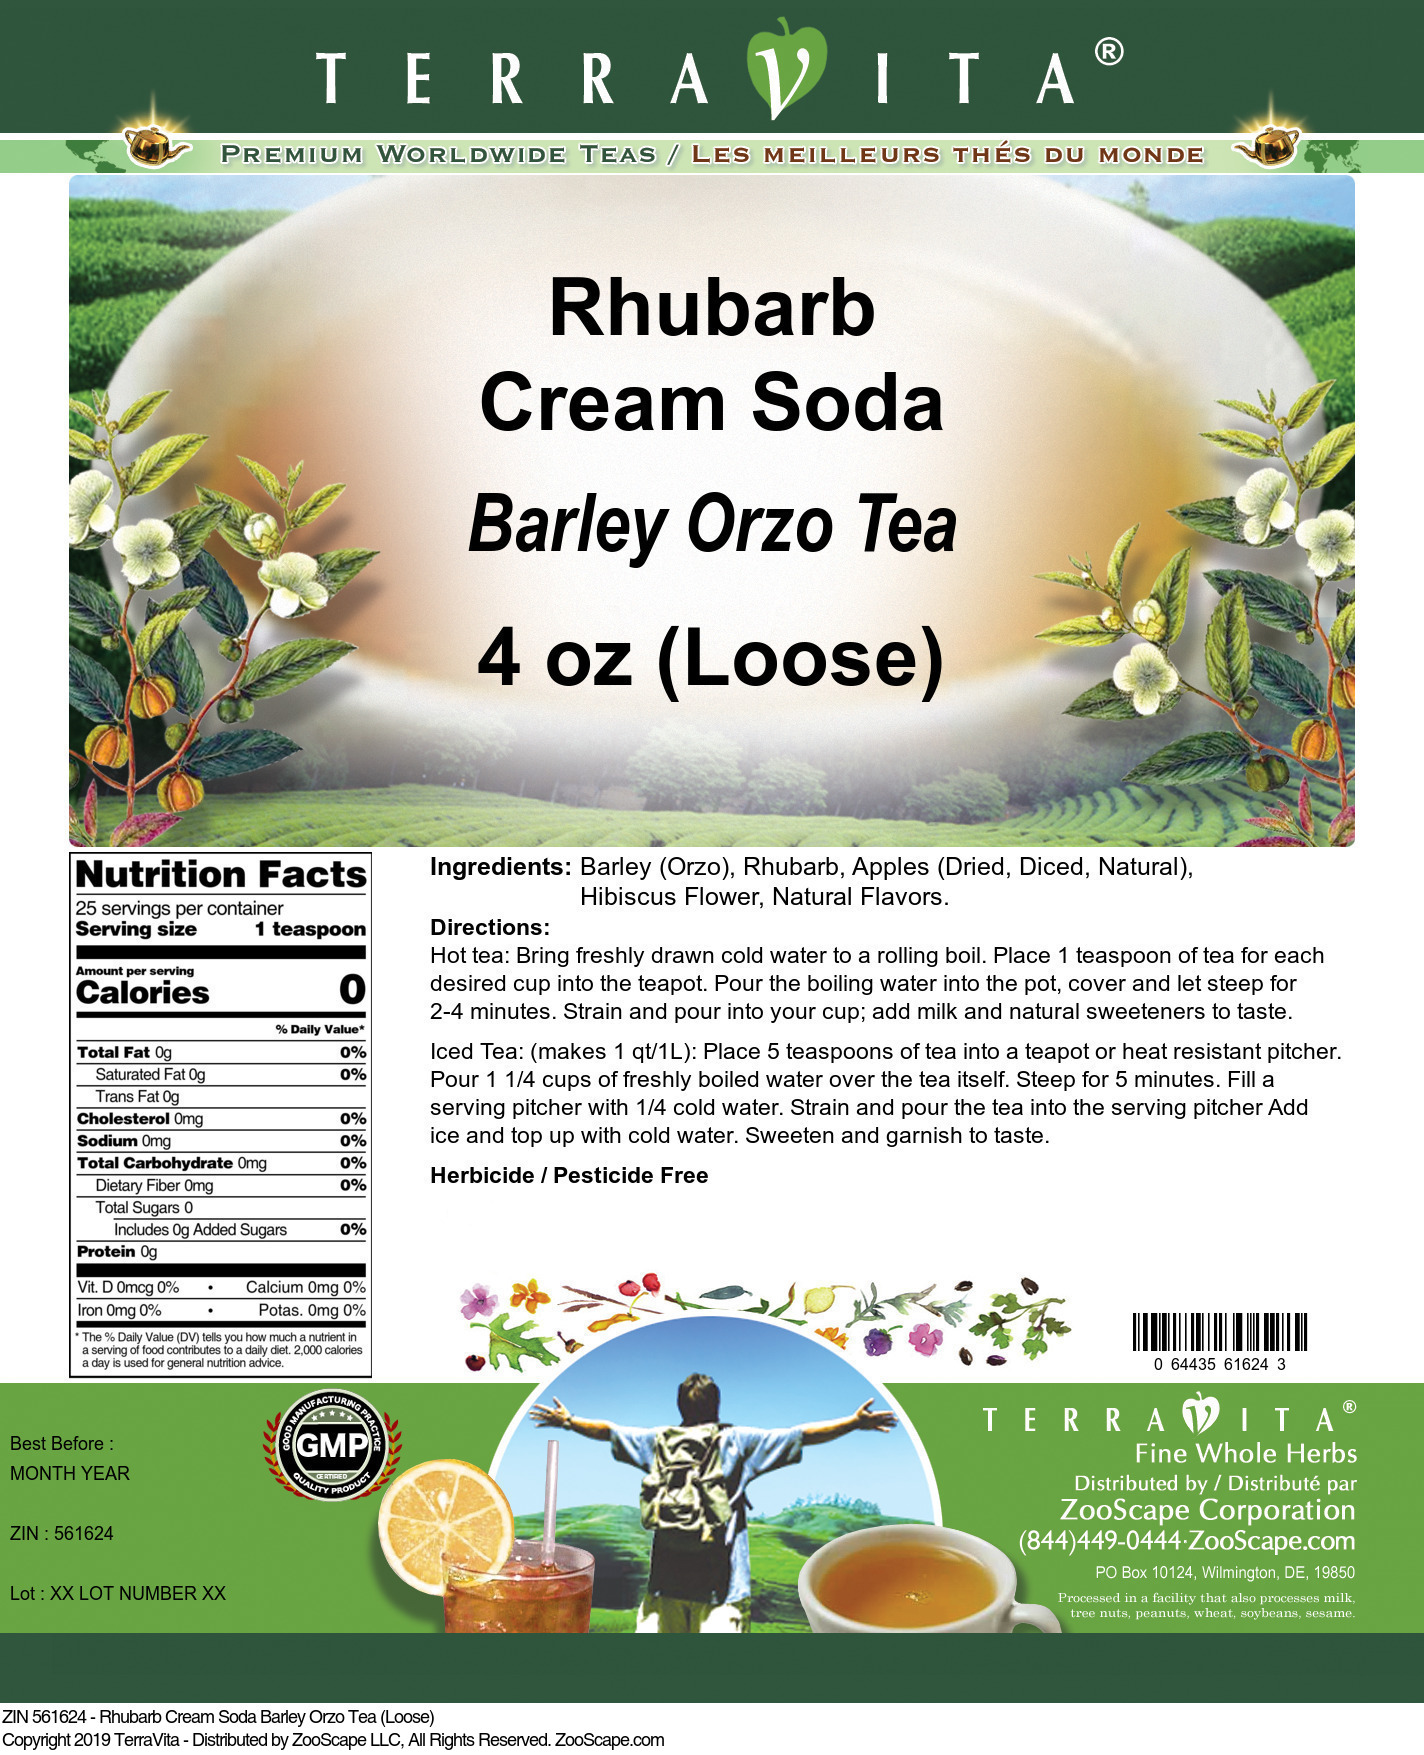 Rhubarb Cream Soda Barley Orzo Tea (Loose) - Label